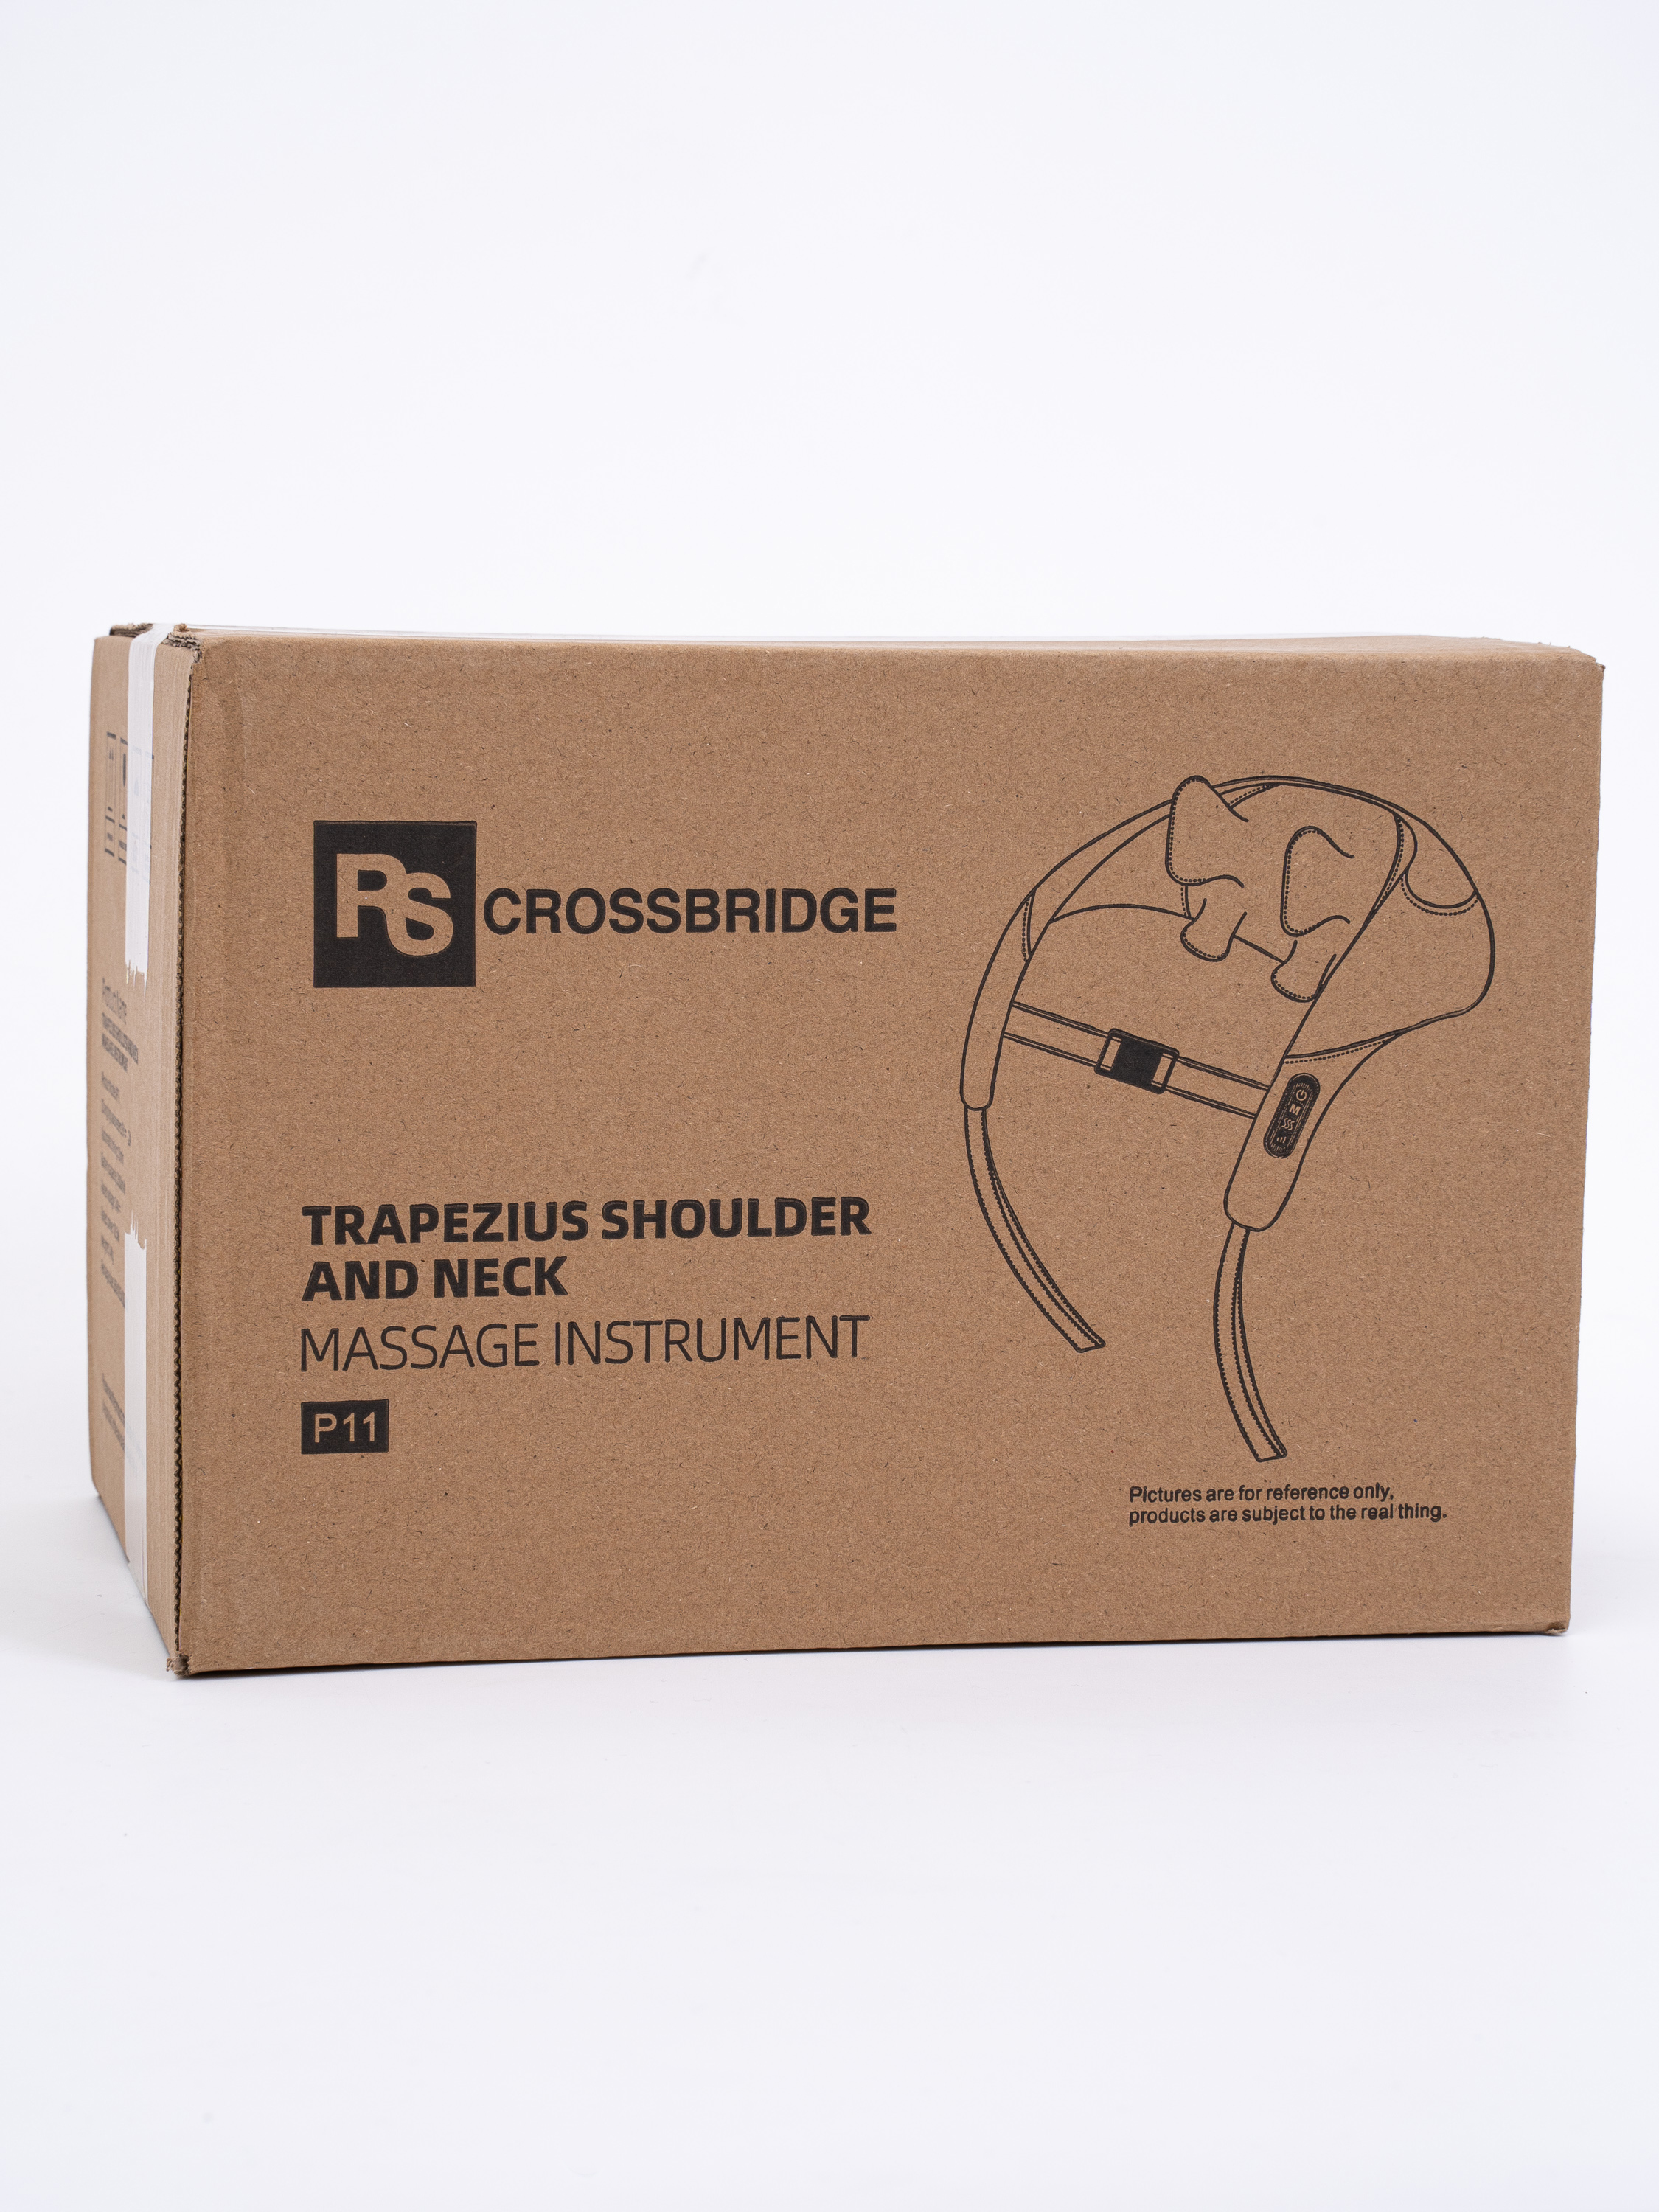 Electric neck and shoulder massager RSCrossbridge